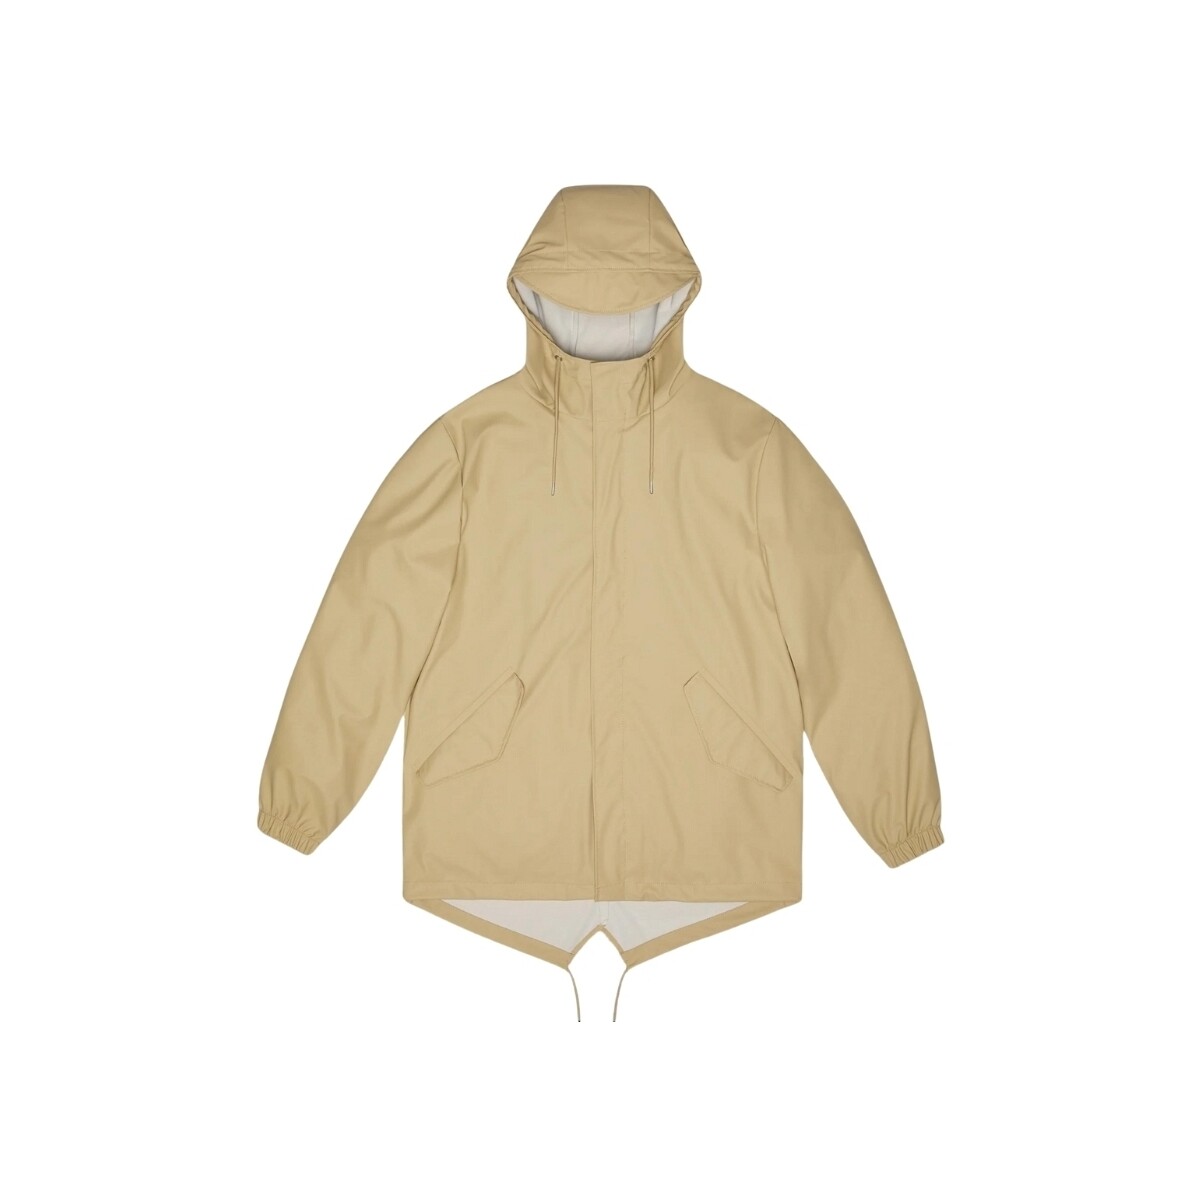 Abbigliamento giacca a vento Rains  Giallo-24-Sand